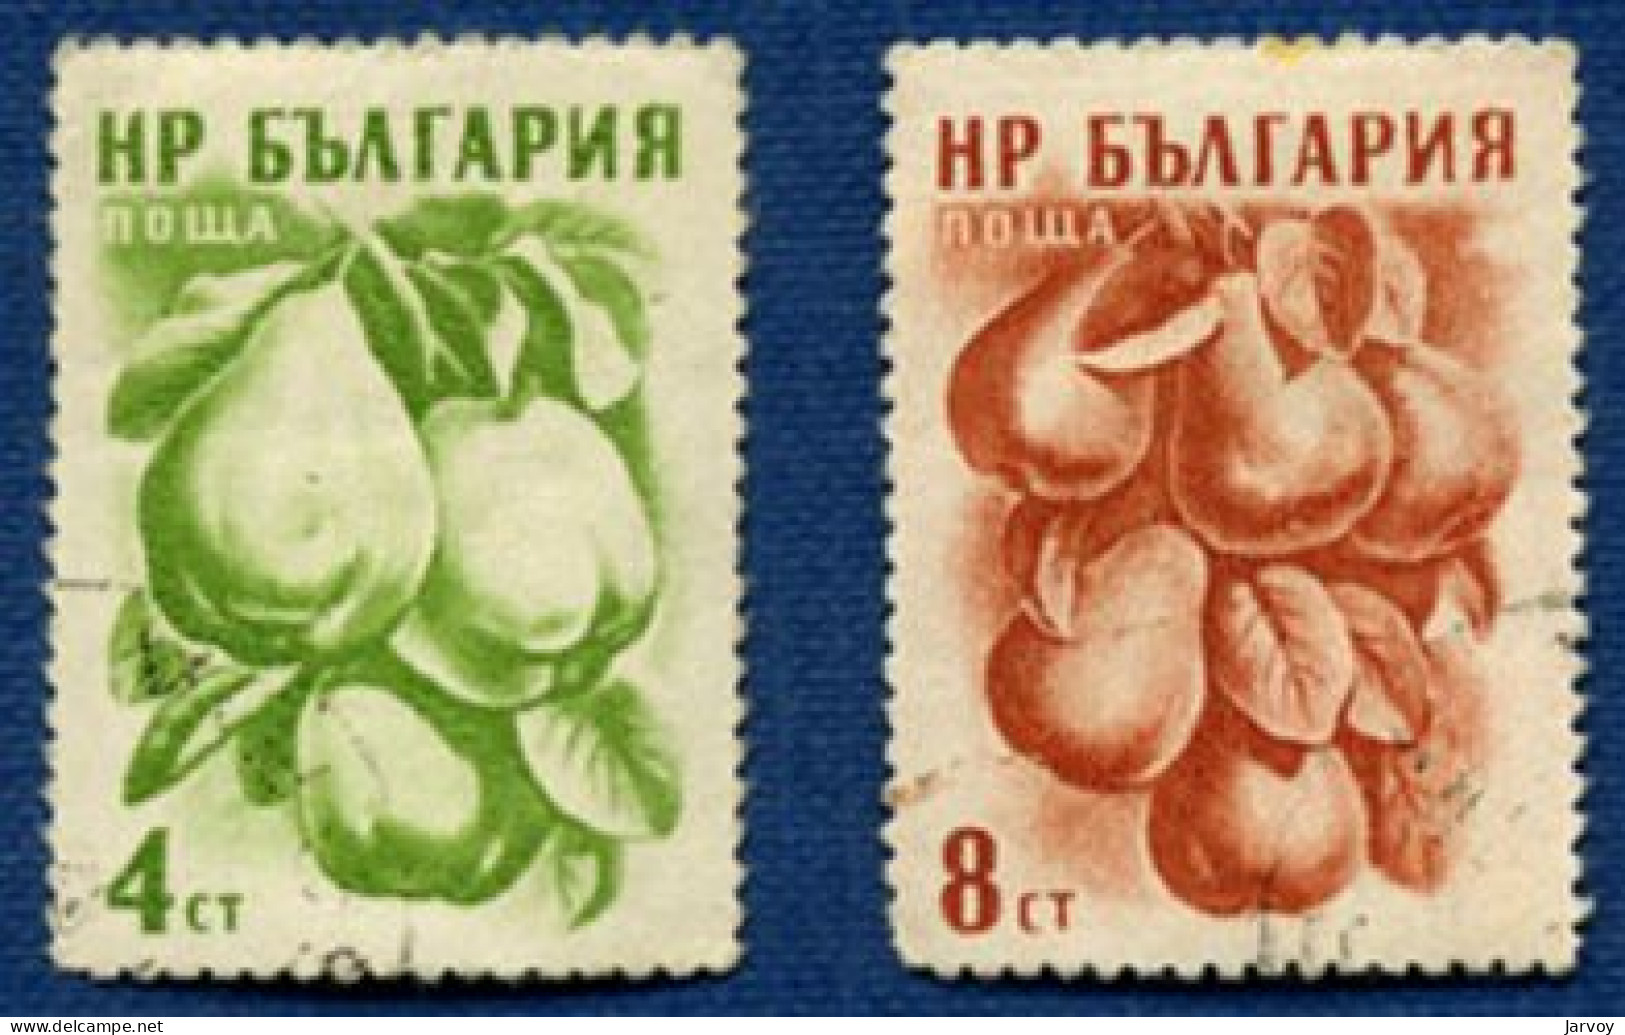 Bulgarie 1956 à 1988, Fruits, Légumes, Fleurs (19 Timbres - O) - Gebruikt